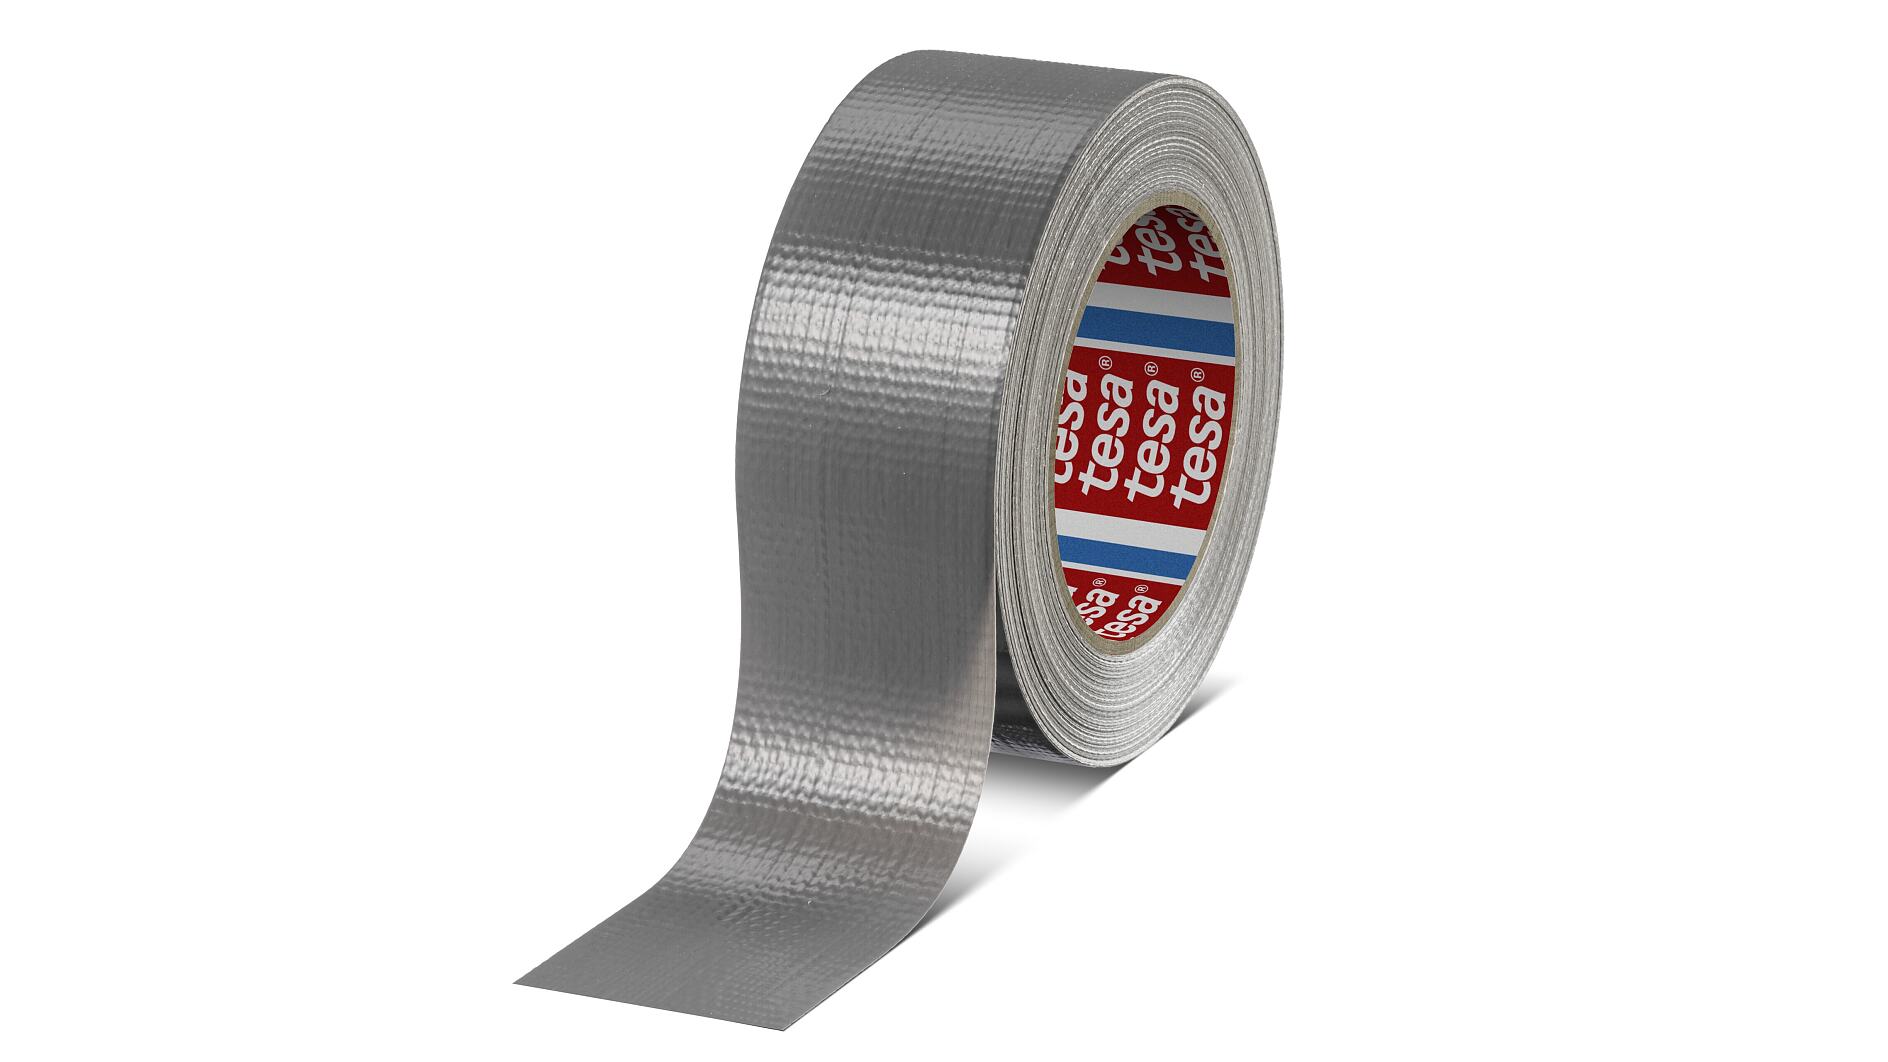 tesa® Professional 4610 Duct Tape - tesa